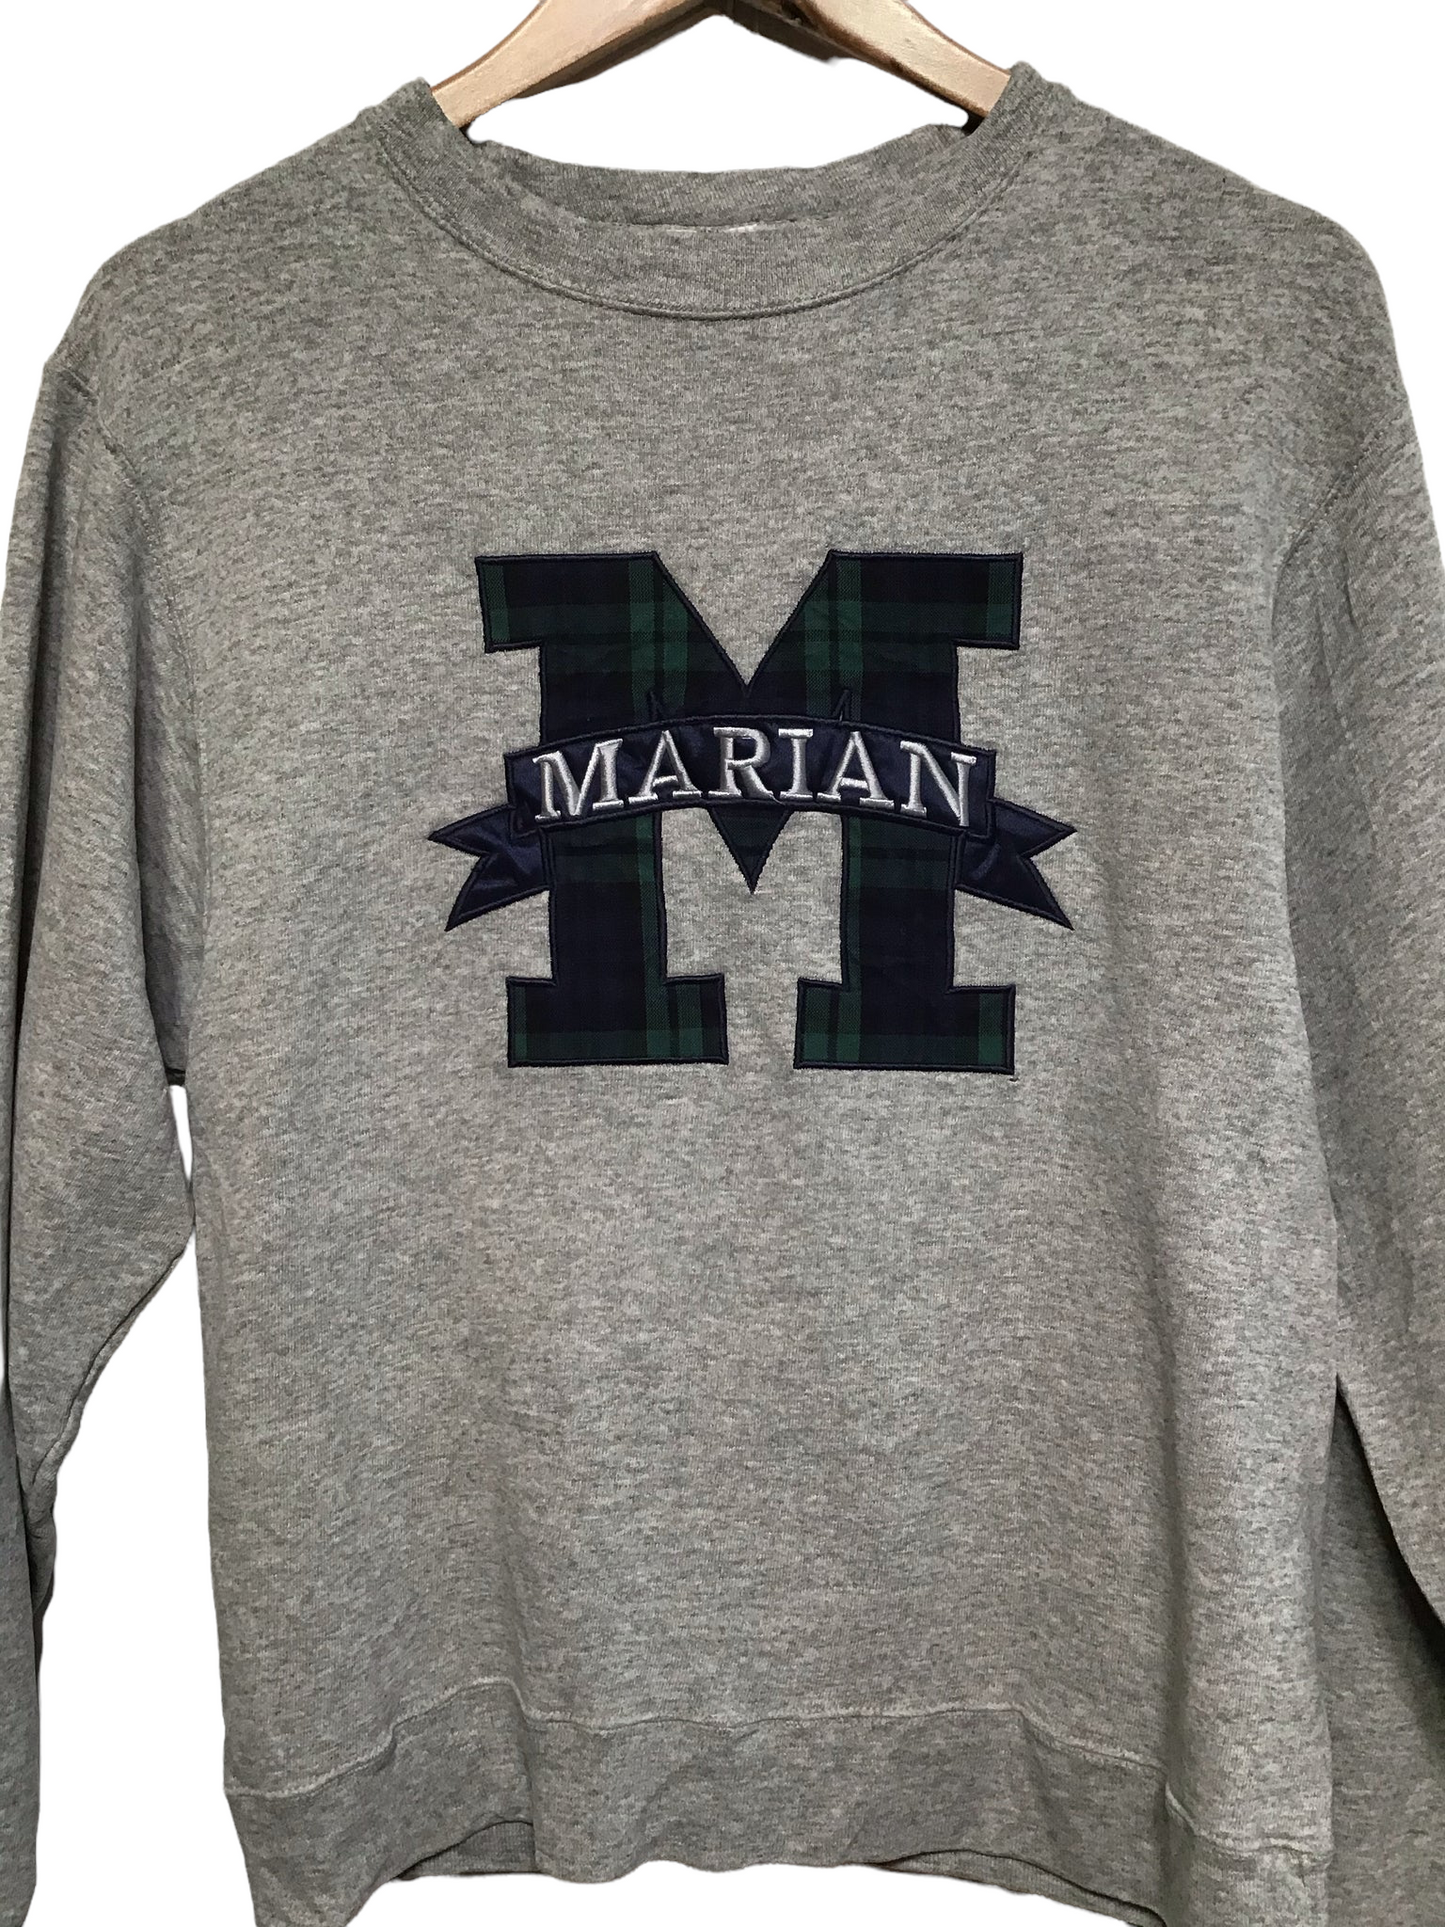 Marian University Sweatshirt (Size S)